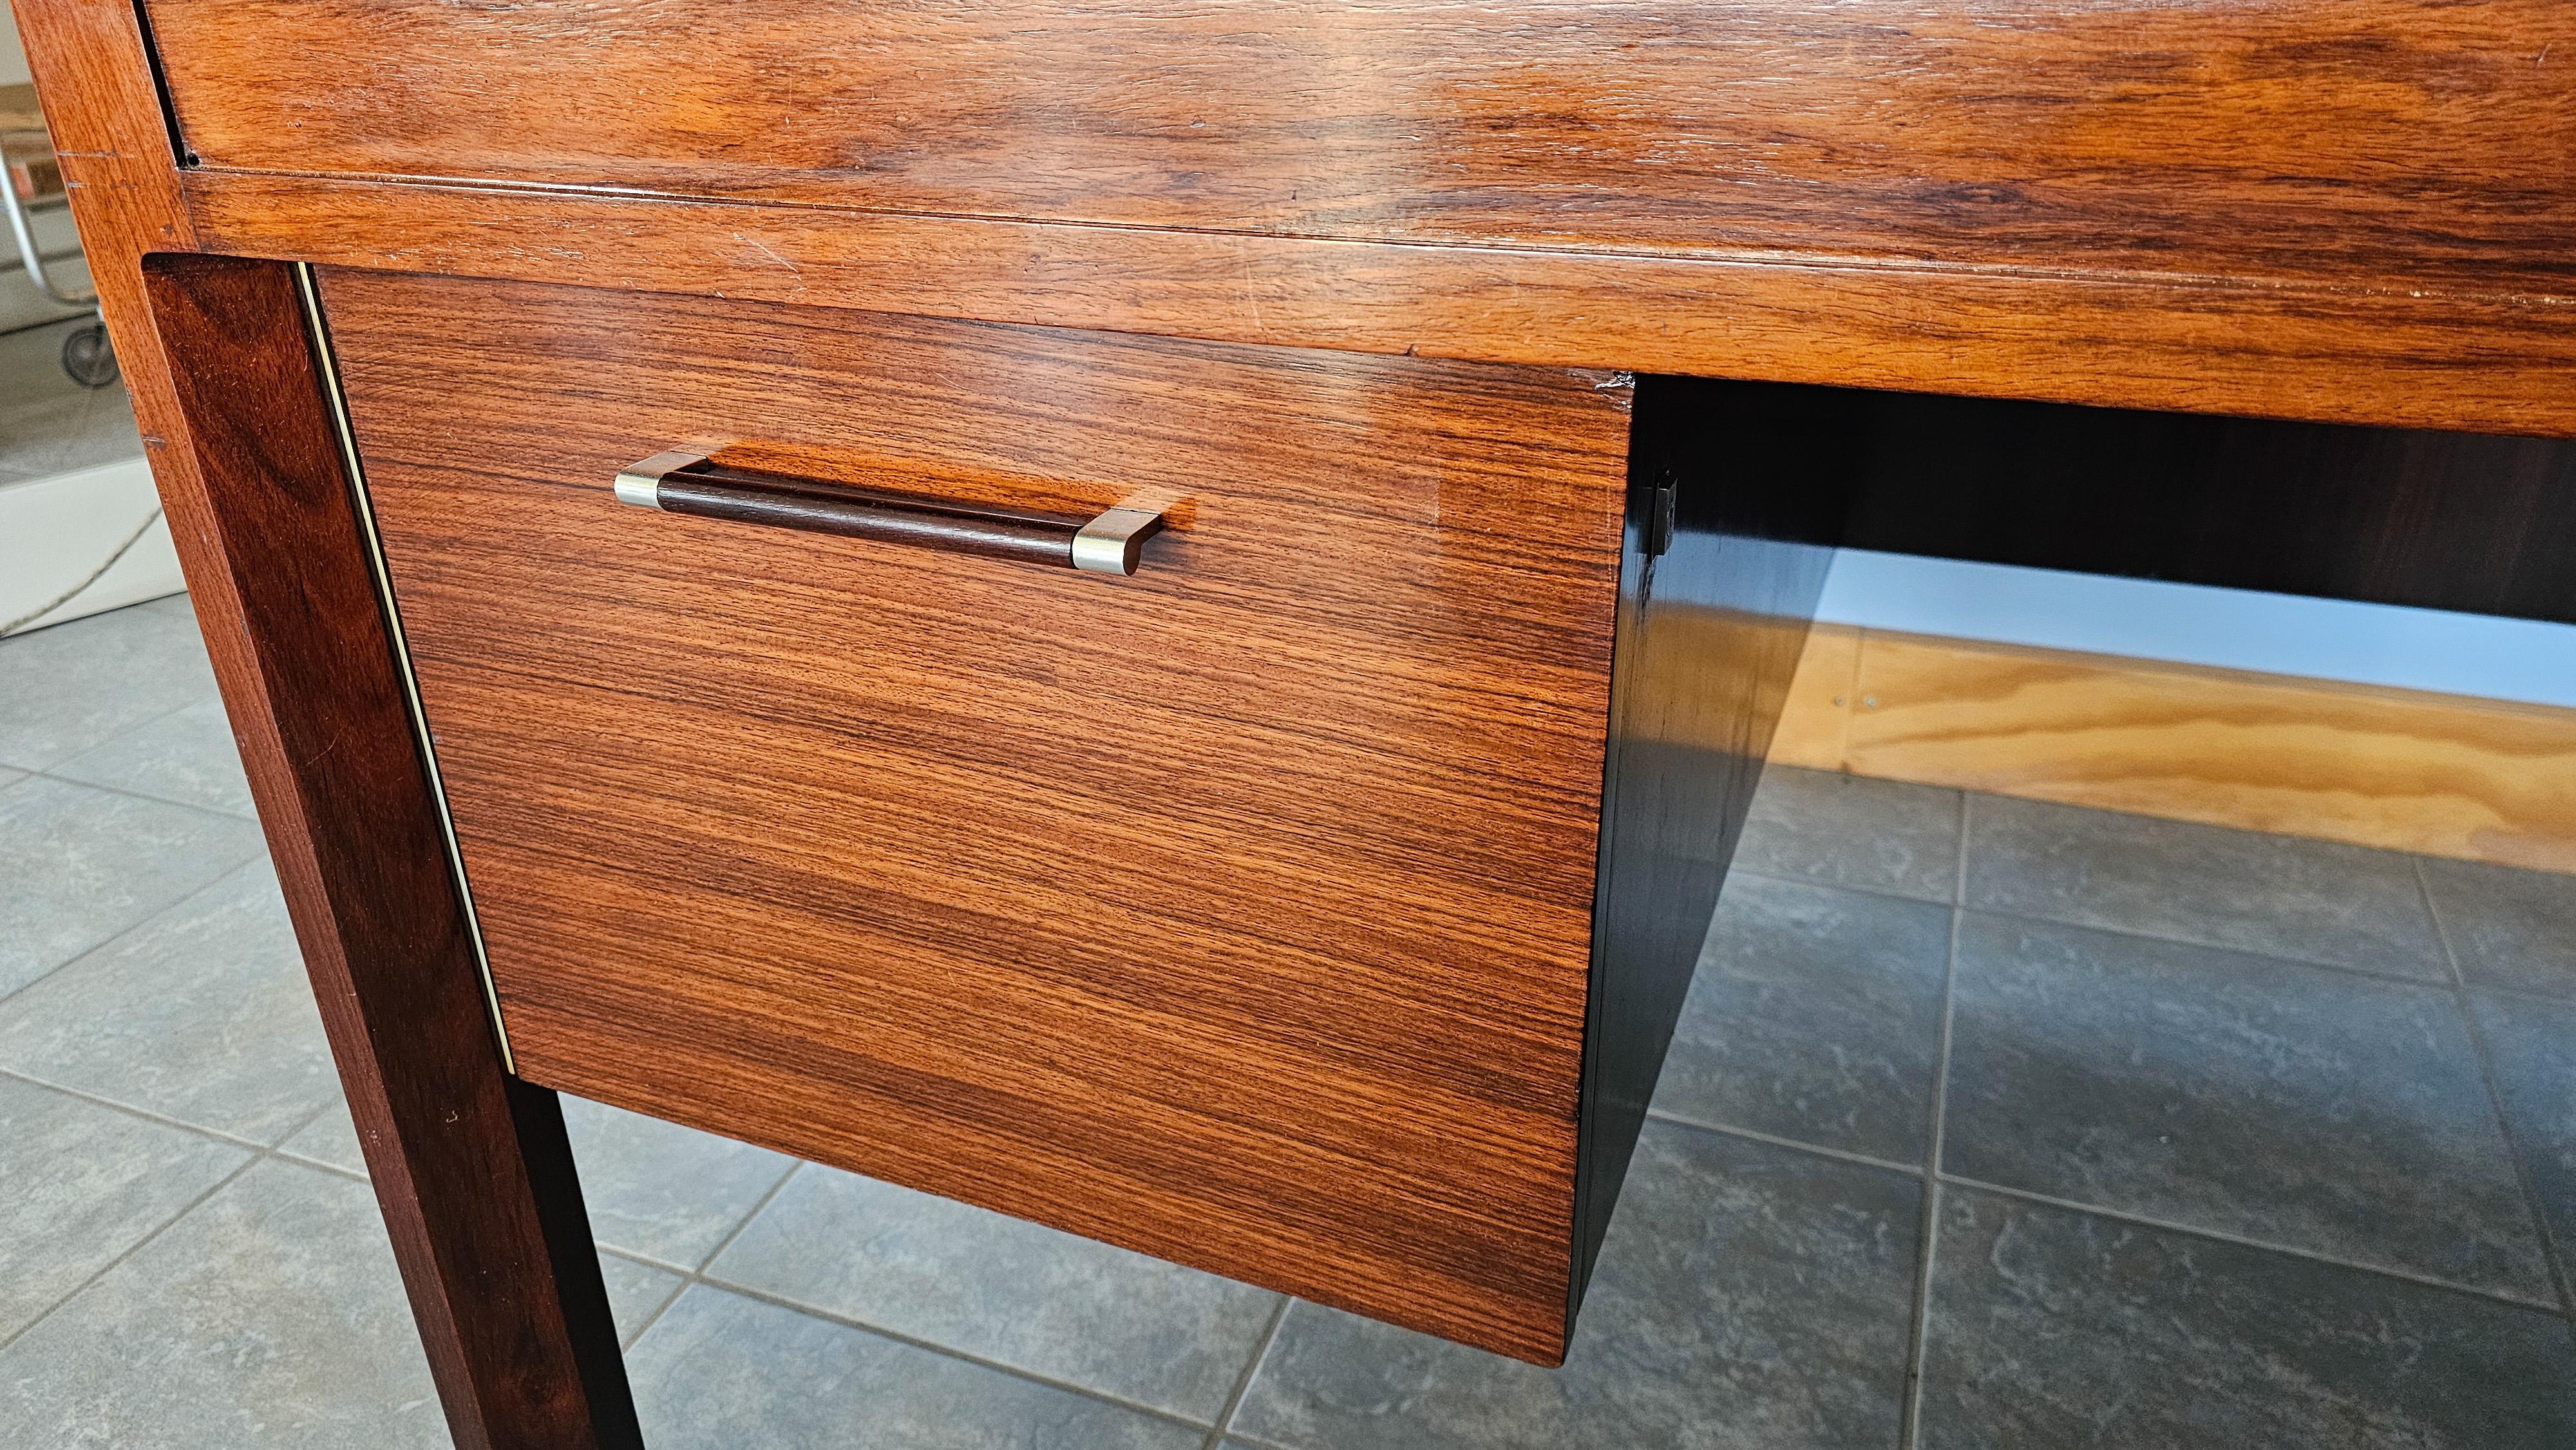 Anonima Castelli Palisander Wood Desk with Elegant Metal Insert Handle, 1970s For Sale 6